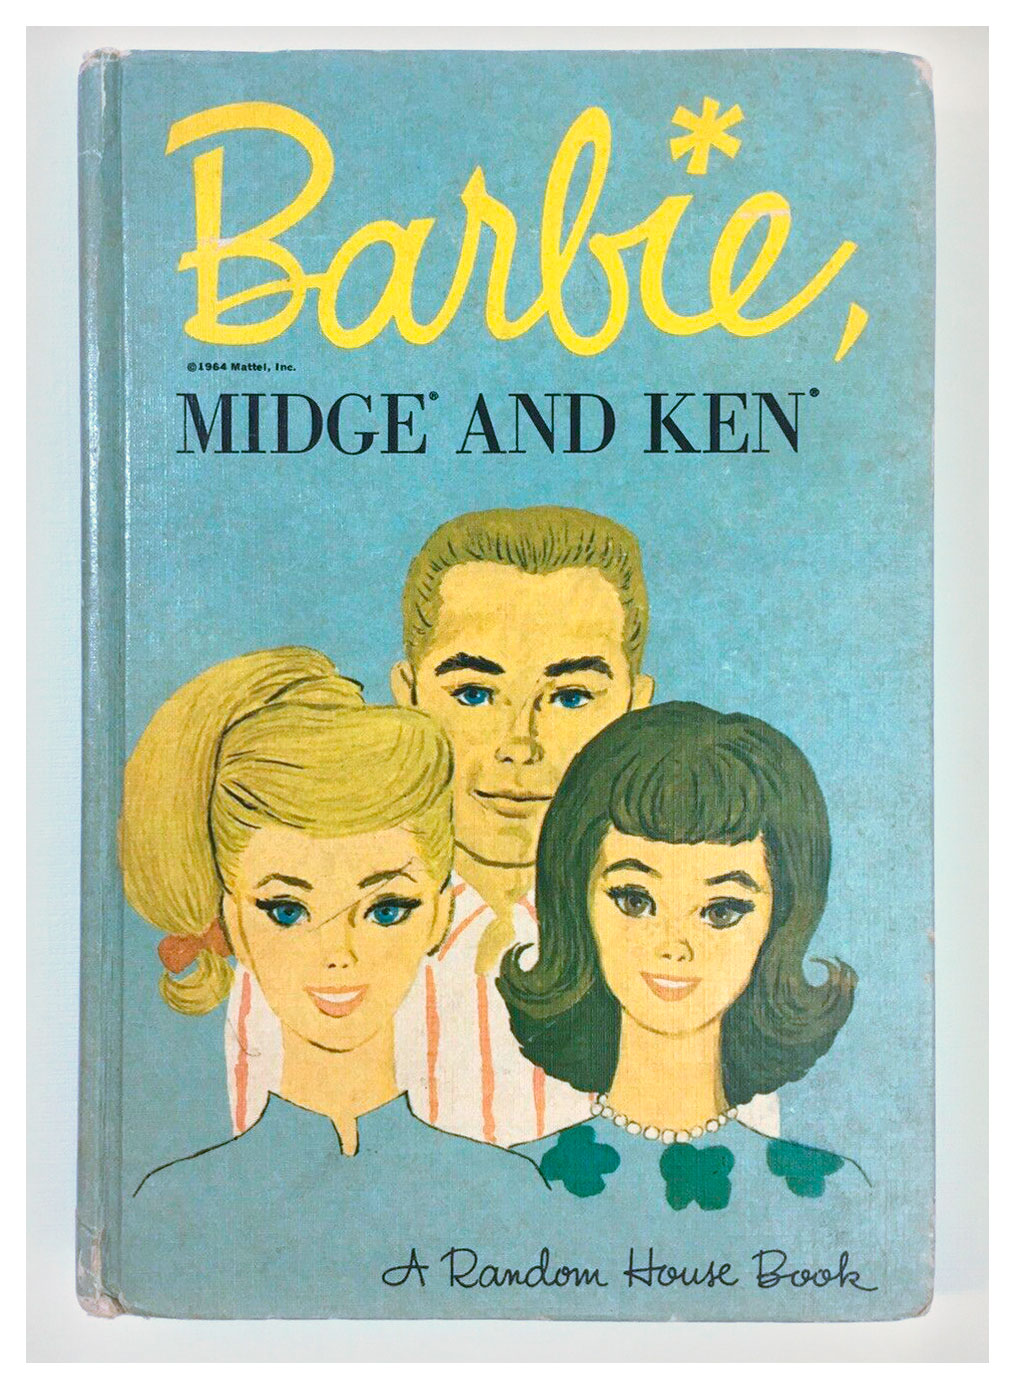 1964 Barbie, Midge and Ken book by Random House